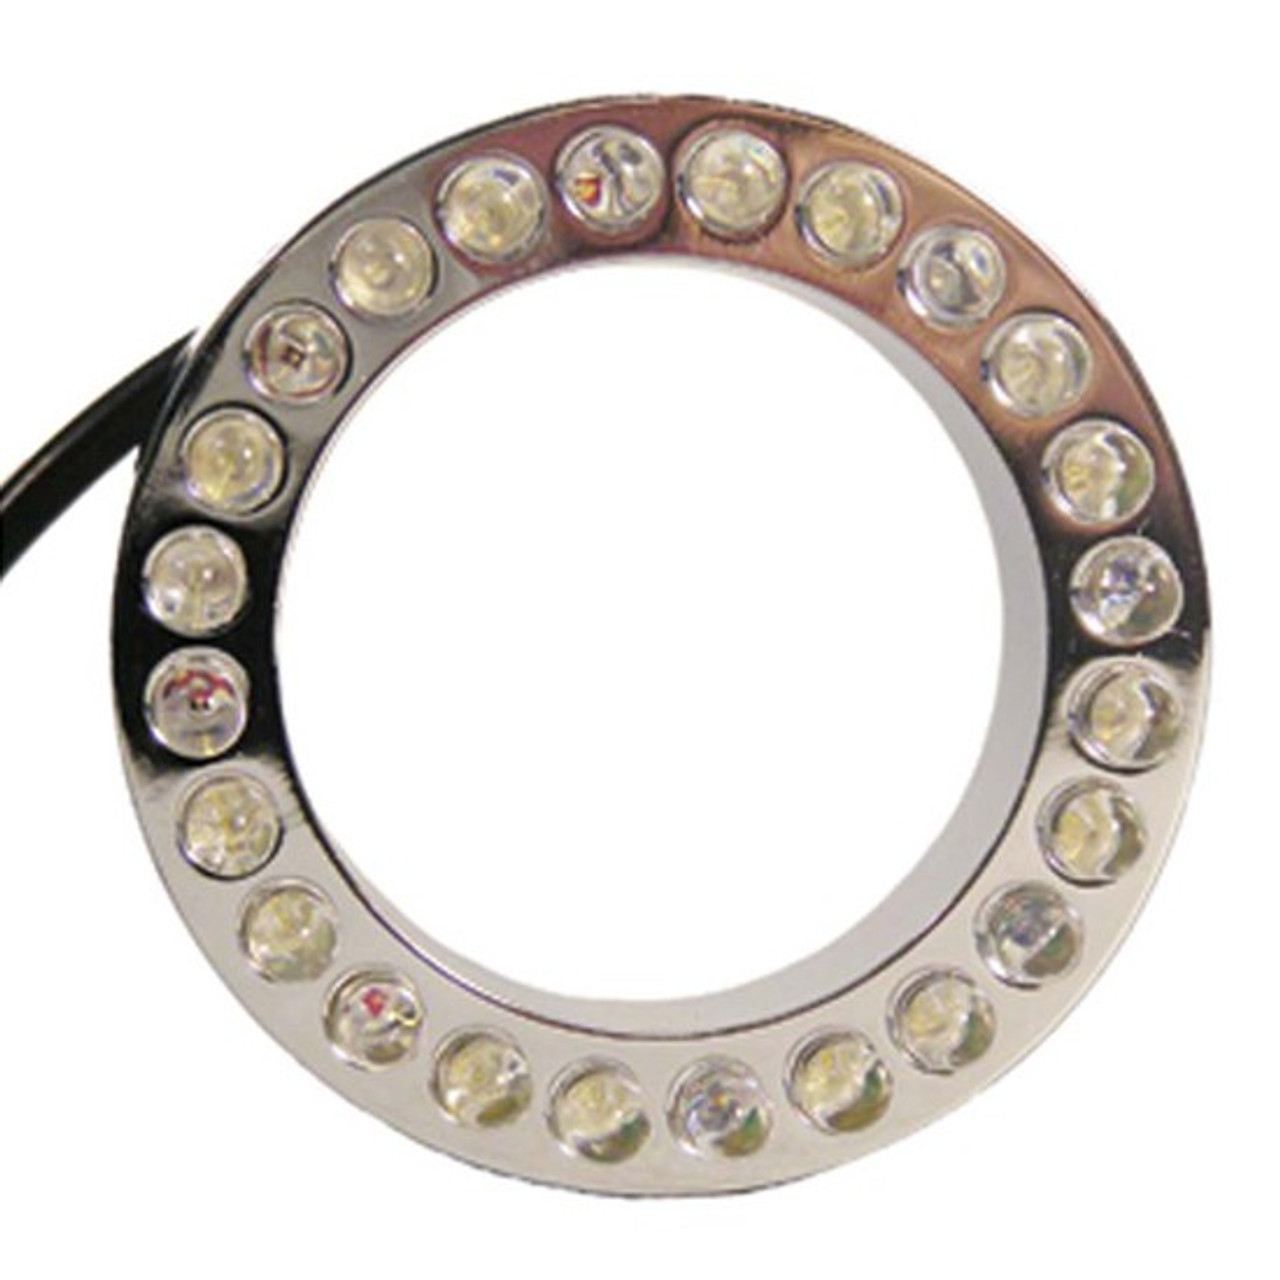 Complete Aquatics 24-LED Ring Light - Cool White